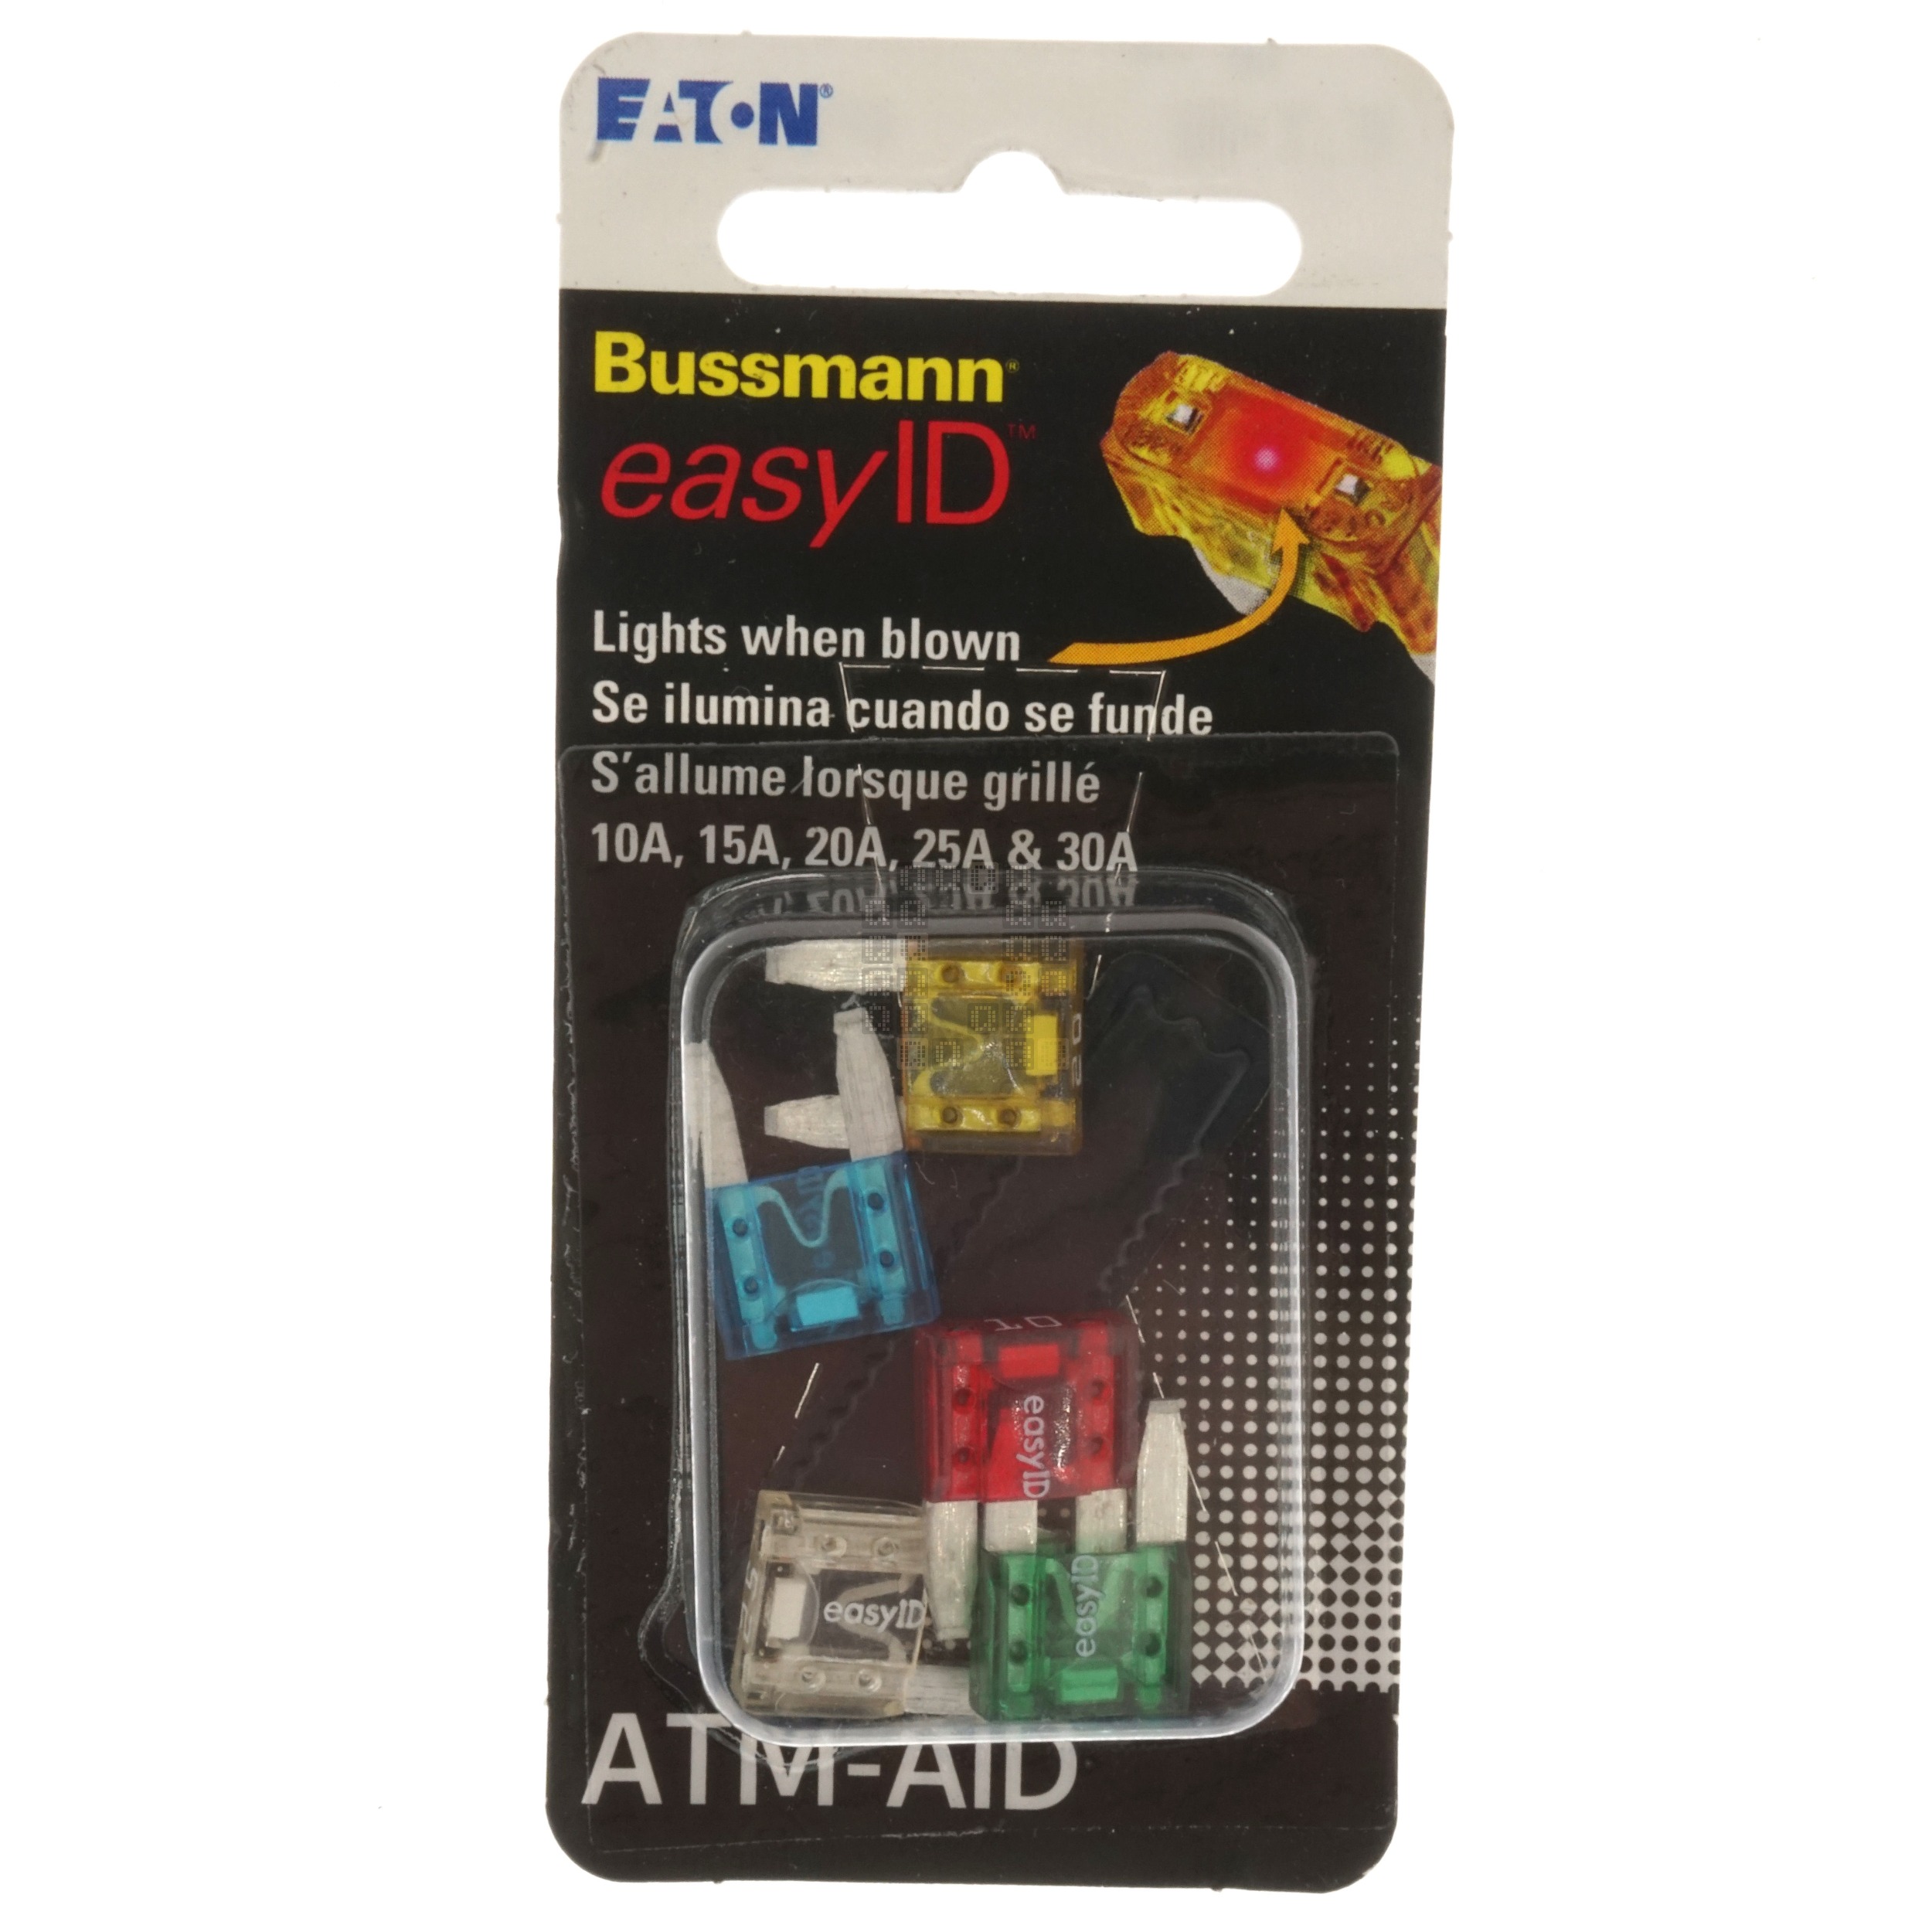 Eaton Bussmann BP/ATM-AID 5-Piece easyID Illuminated ATM Blade Fuse Assortment